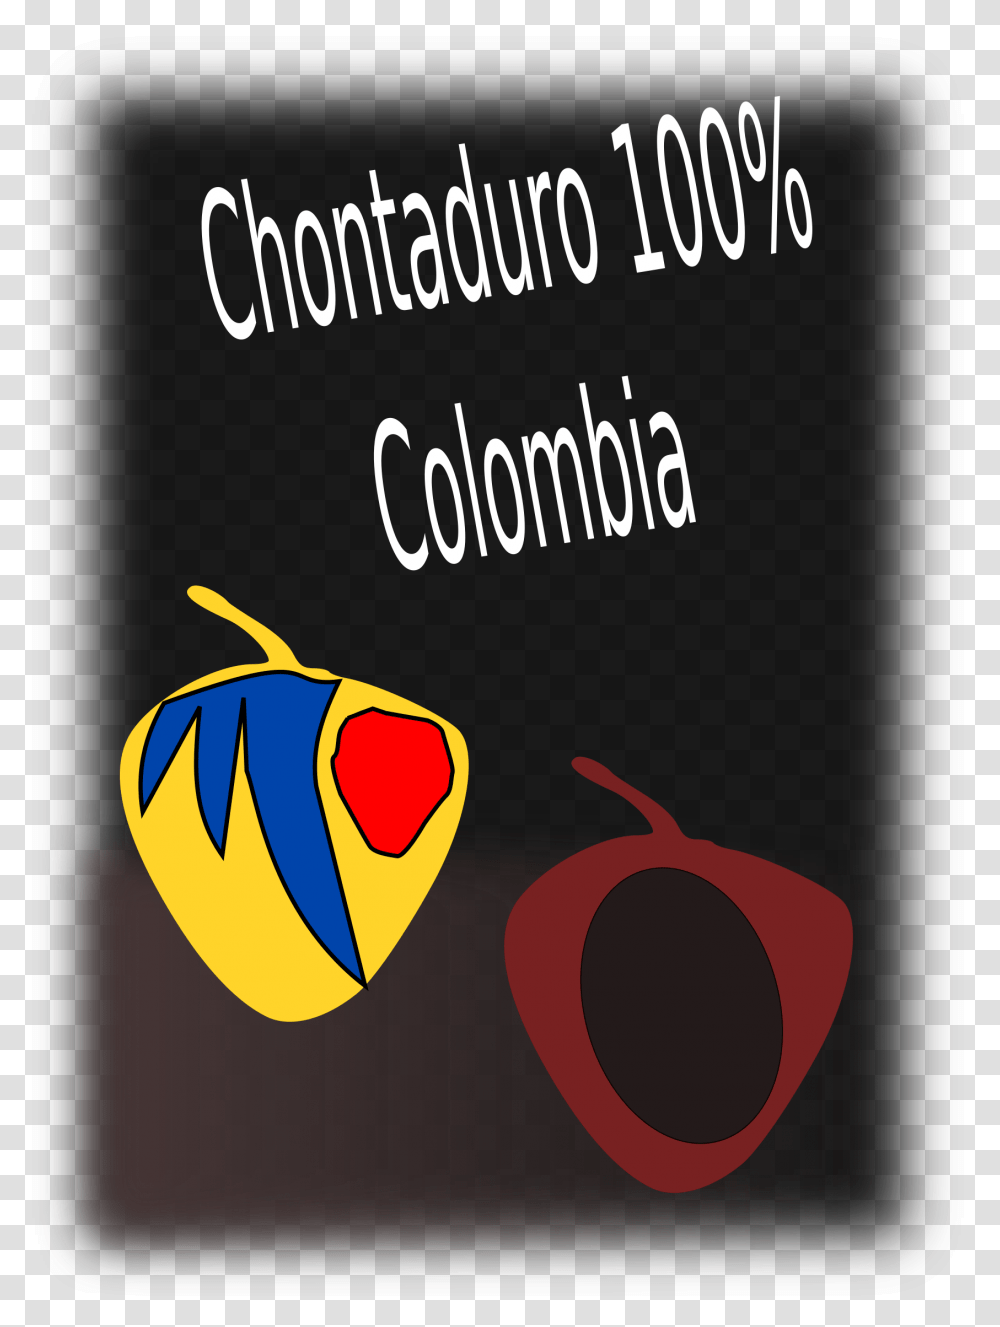 Chontaduro Colombia Clip Arts Meath County Council, Label, Plant, Dynamite Transparent Png